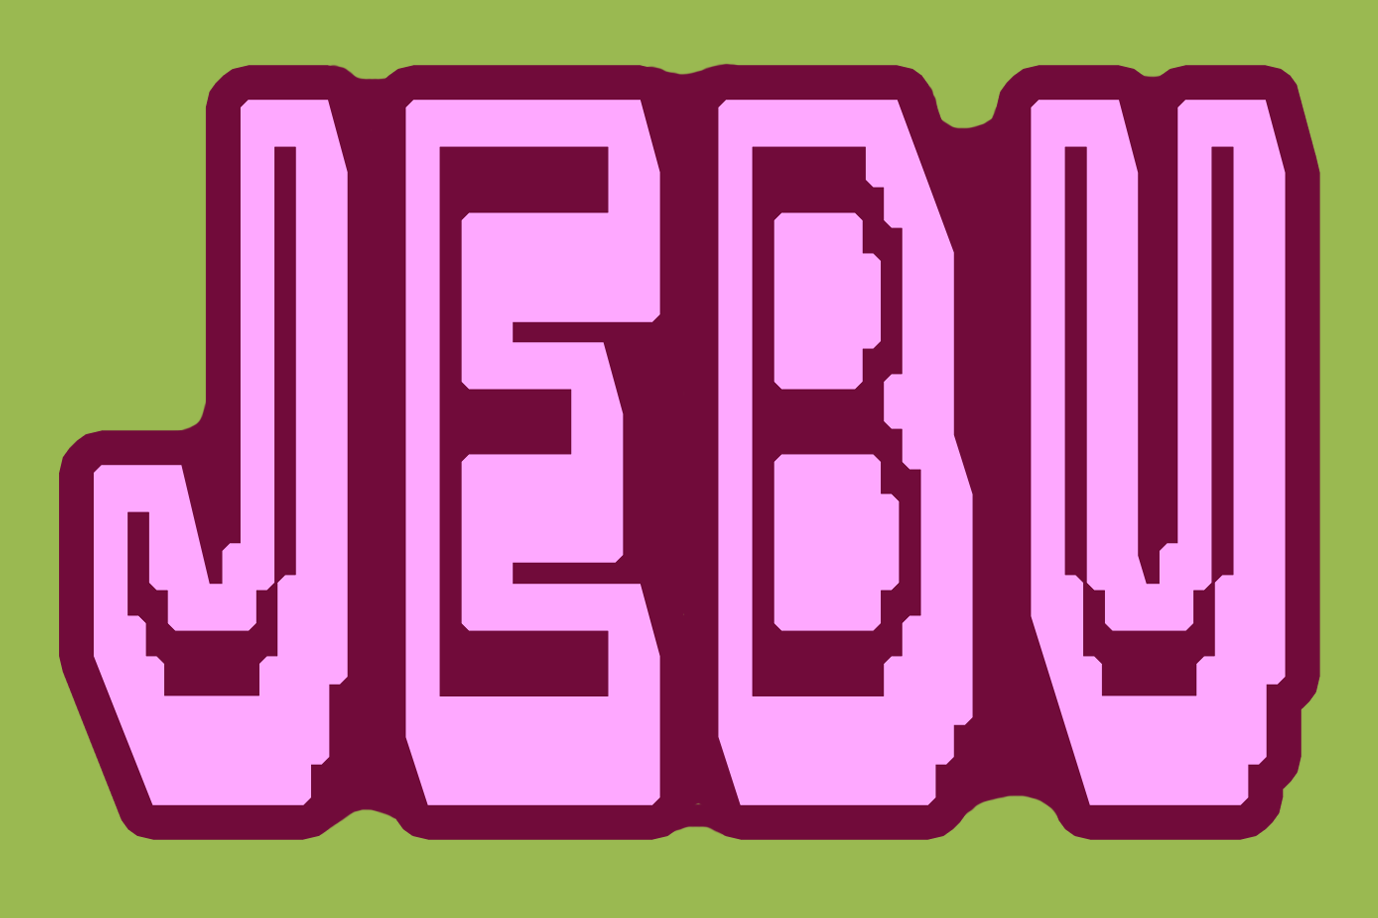 Jebu Pixel Sticker